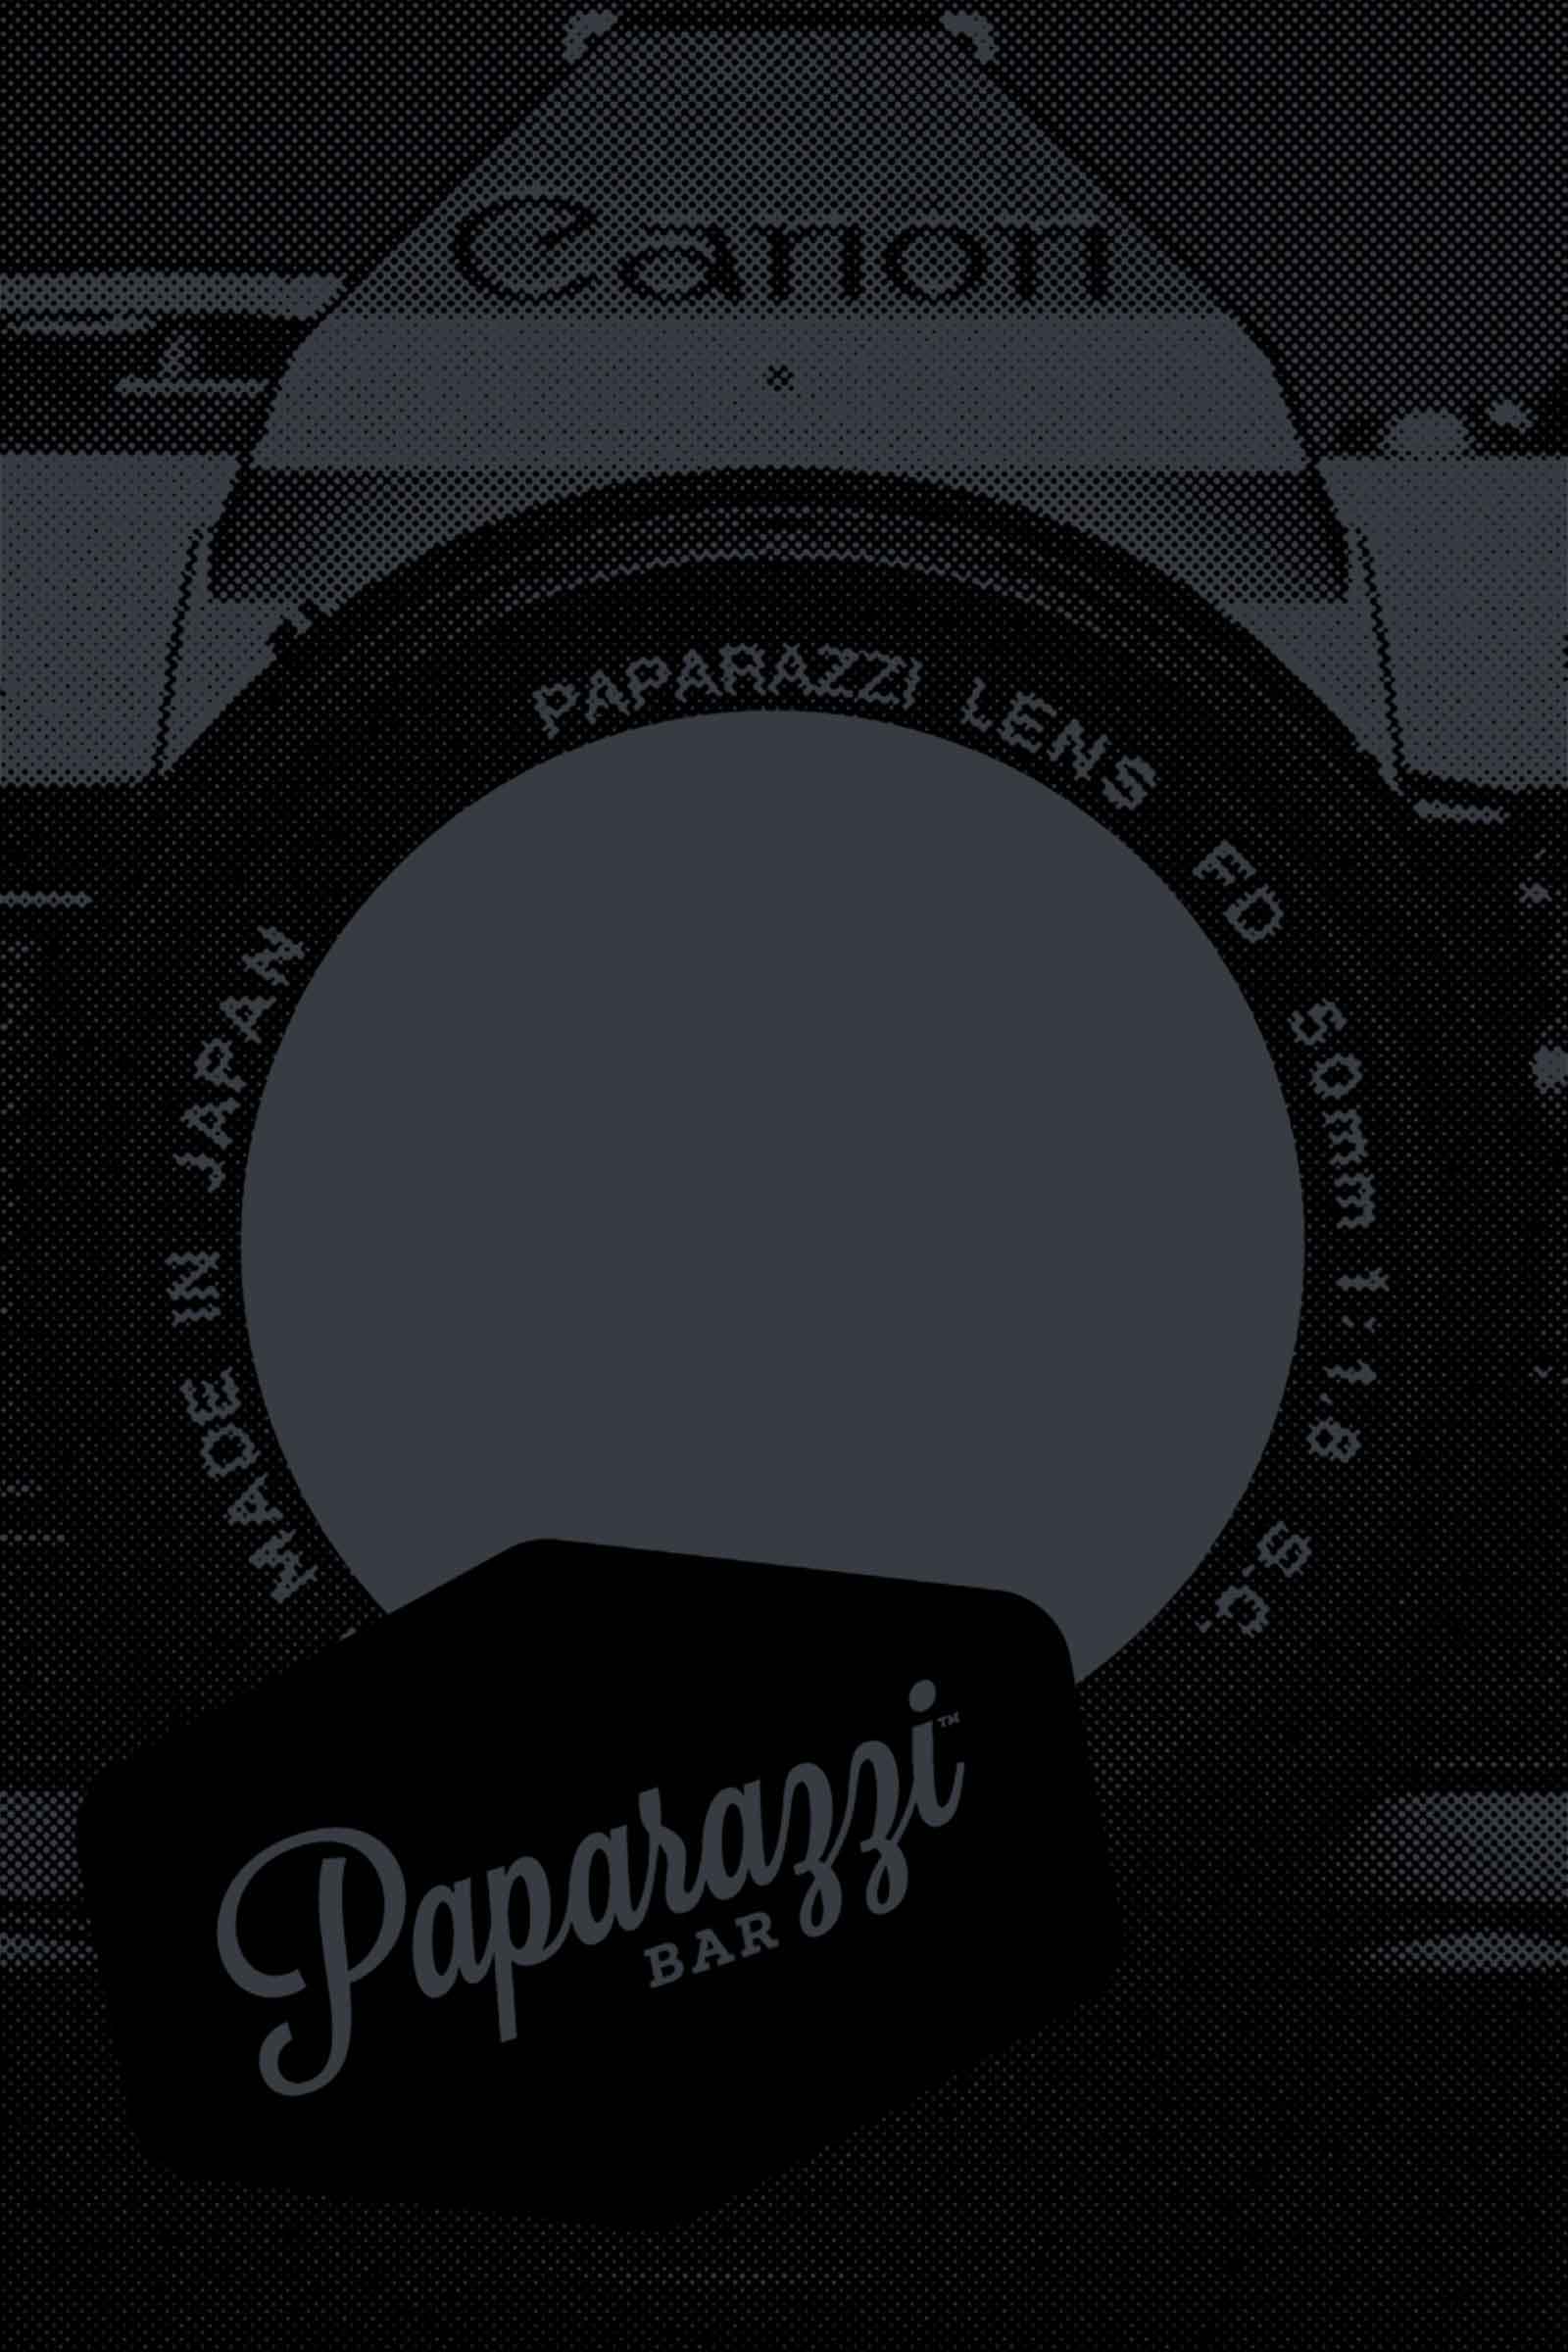 Paparazzi Bar